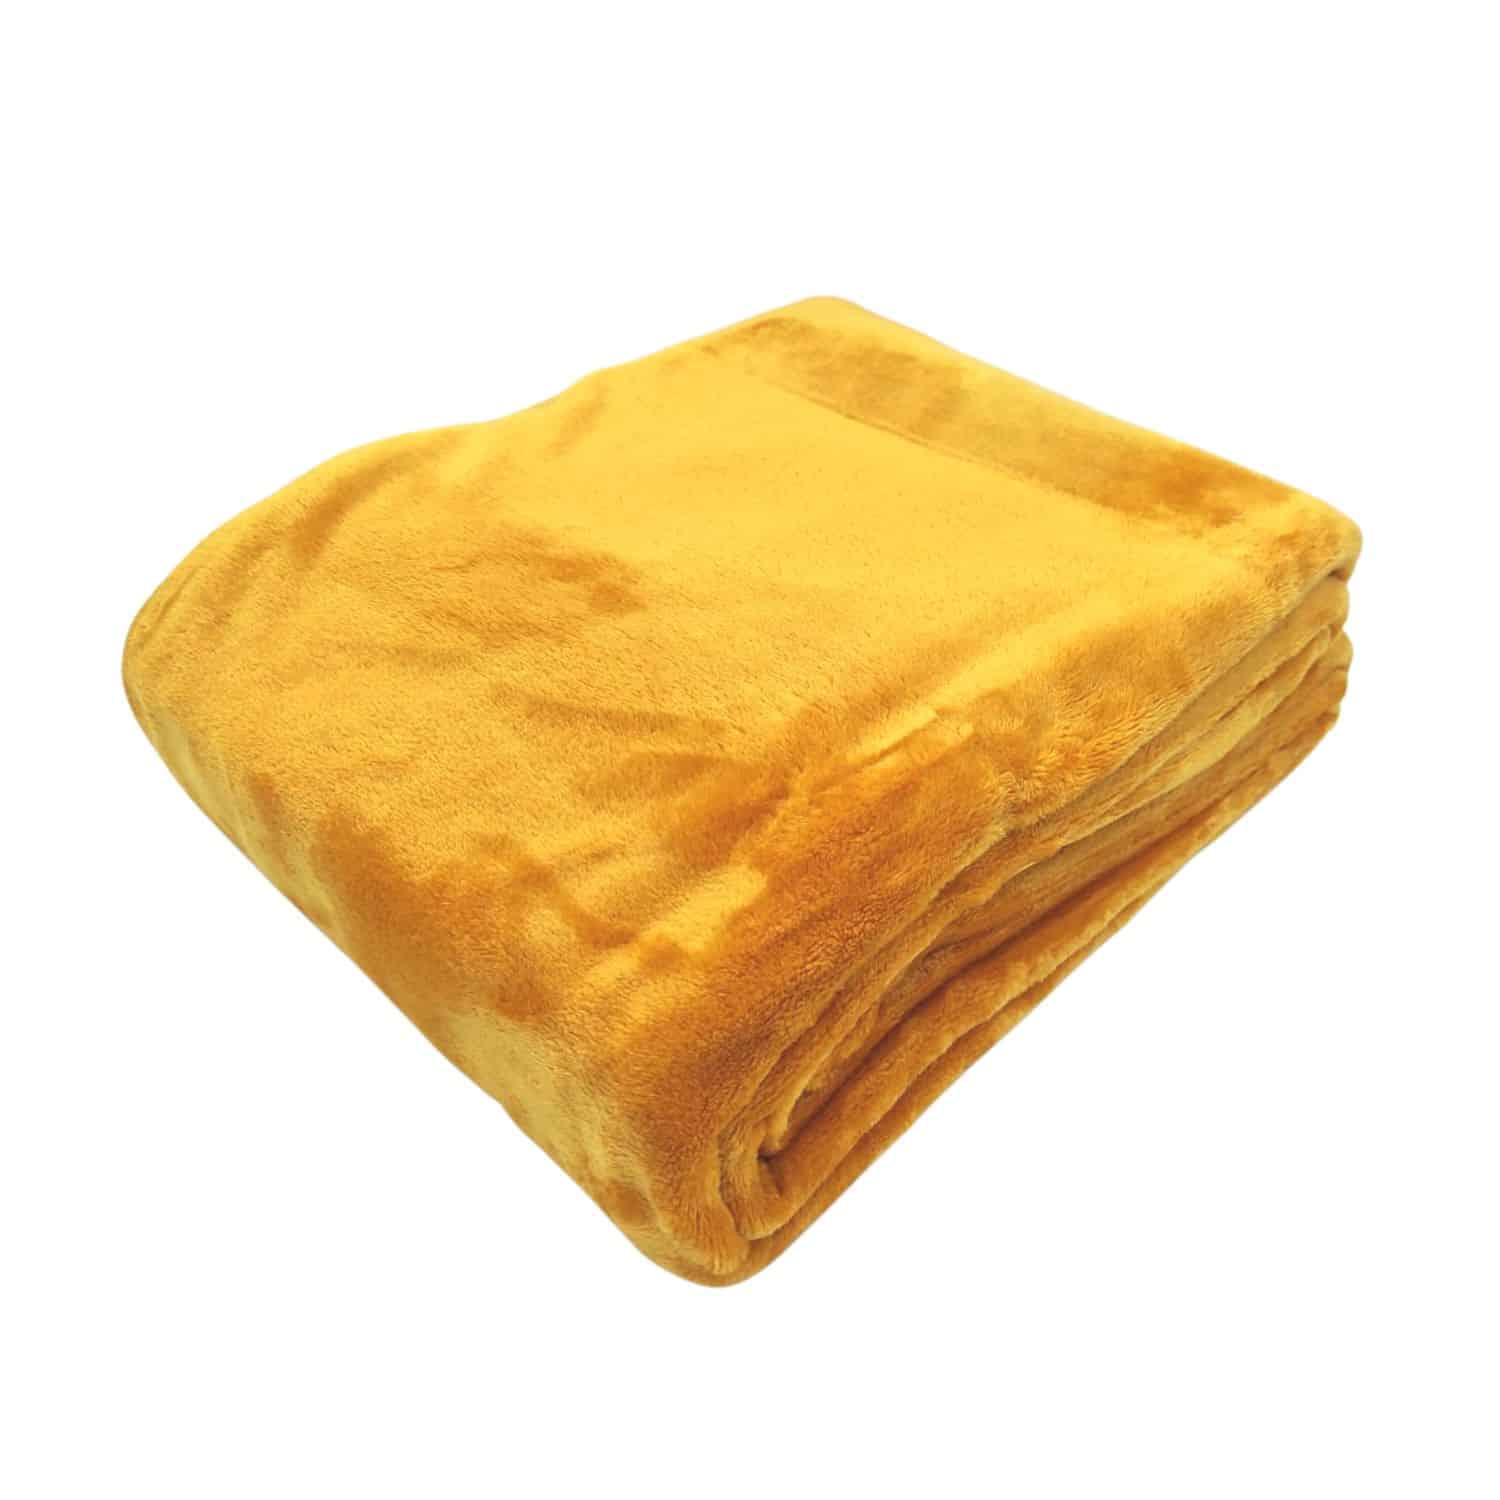 coperta-fashion-plaid-tinta-unita-coral-morbida-giallo-ocra